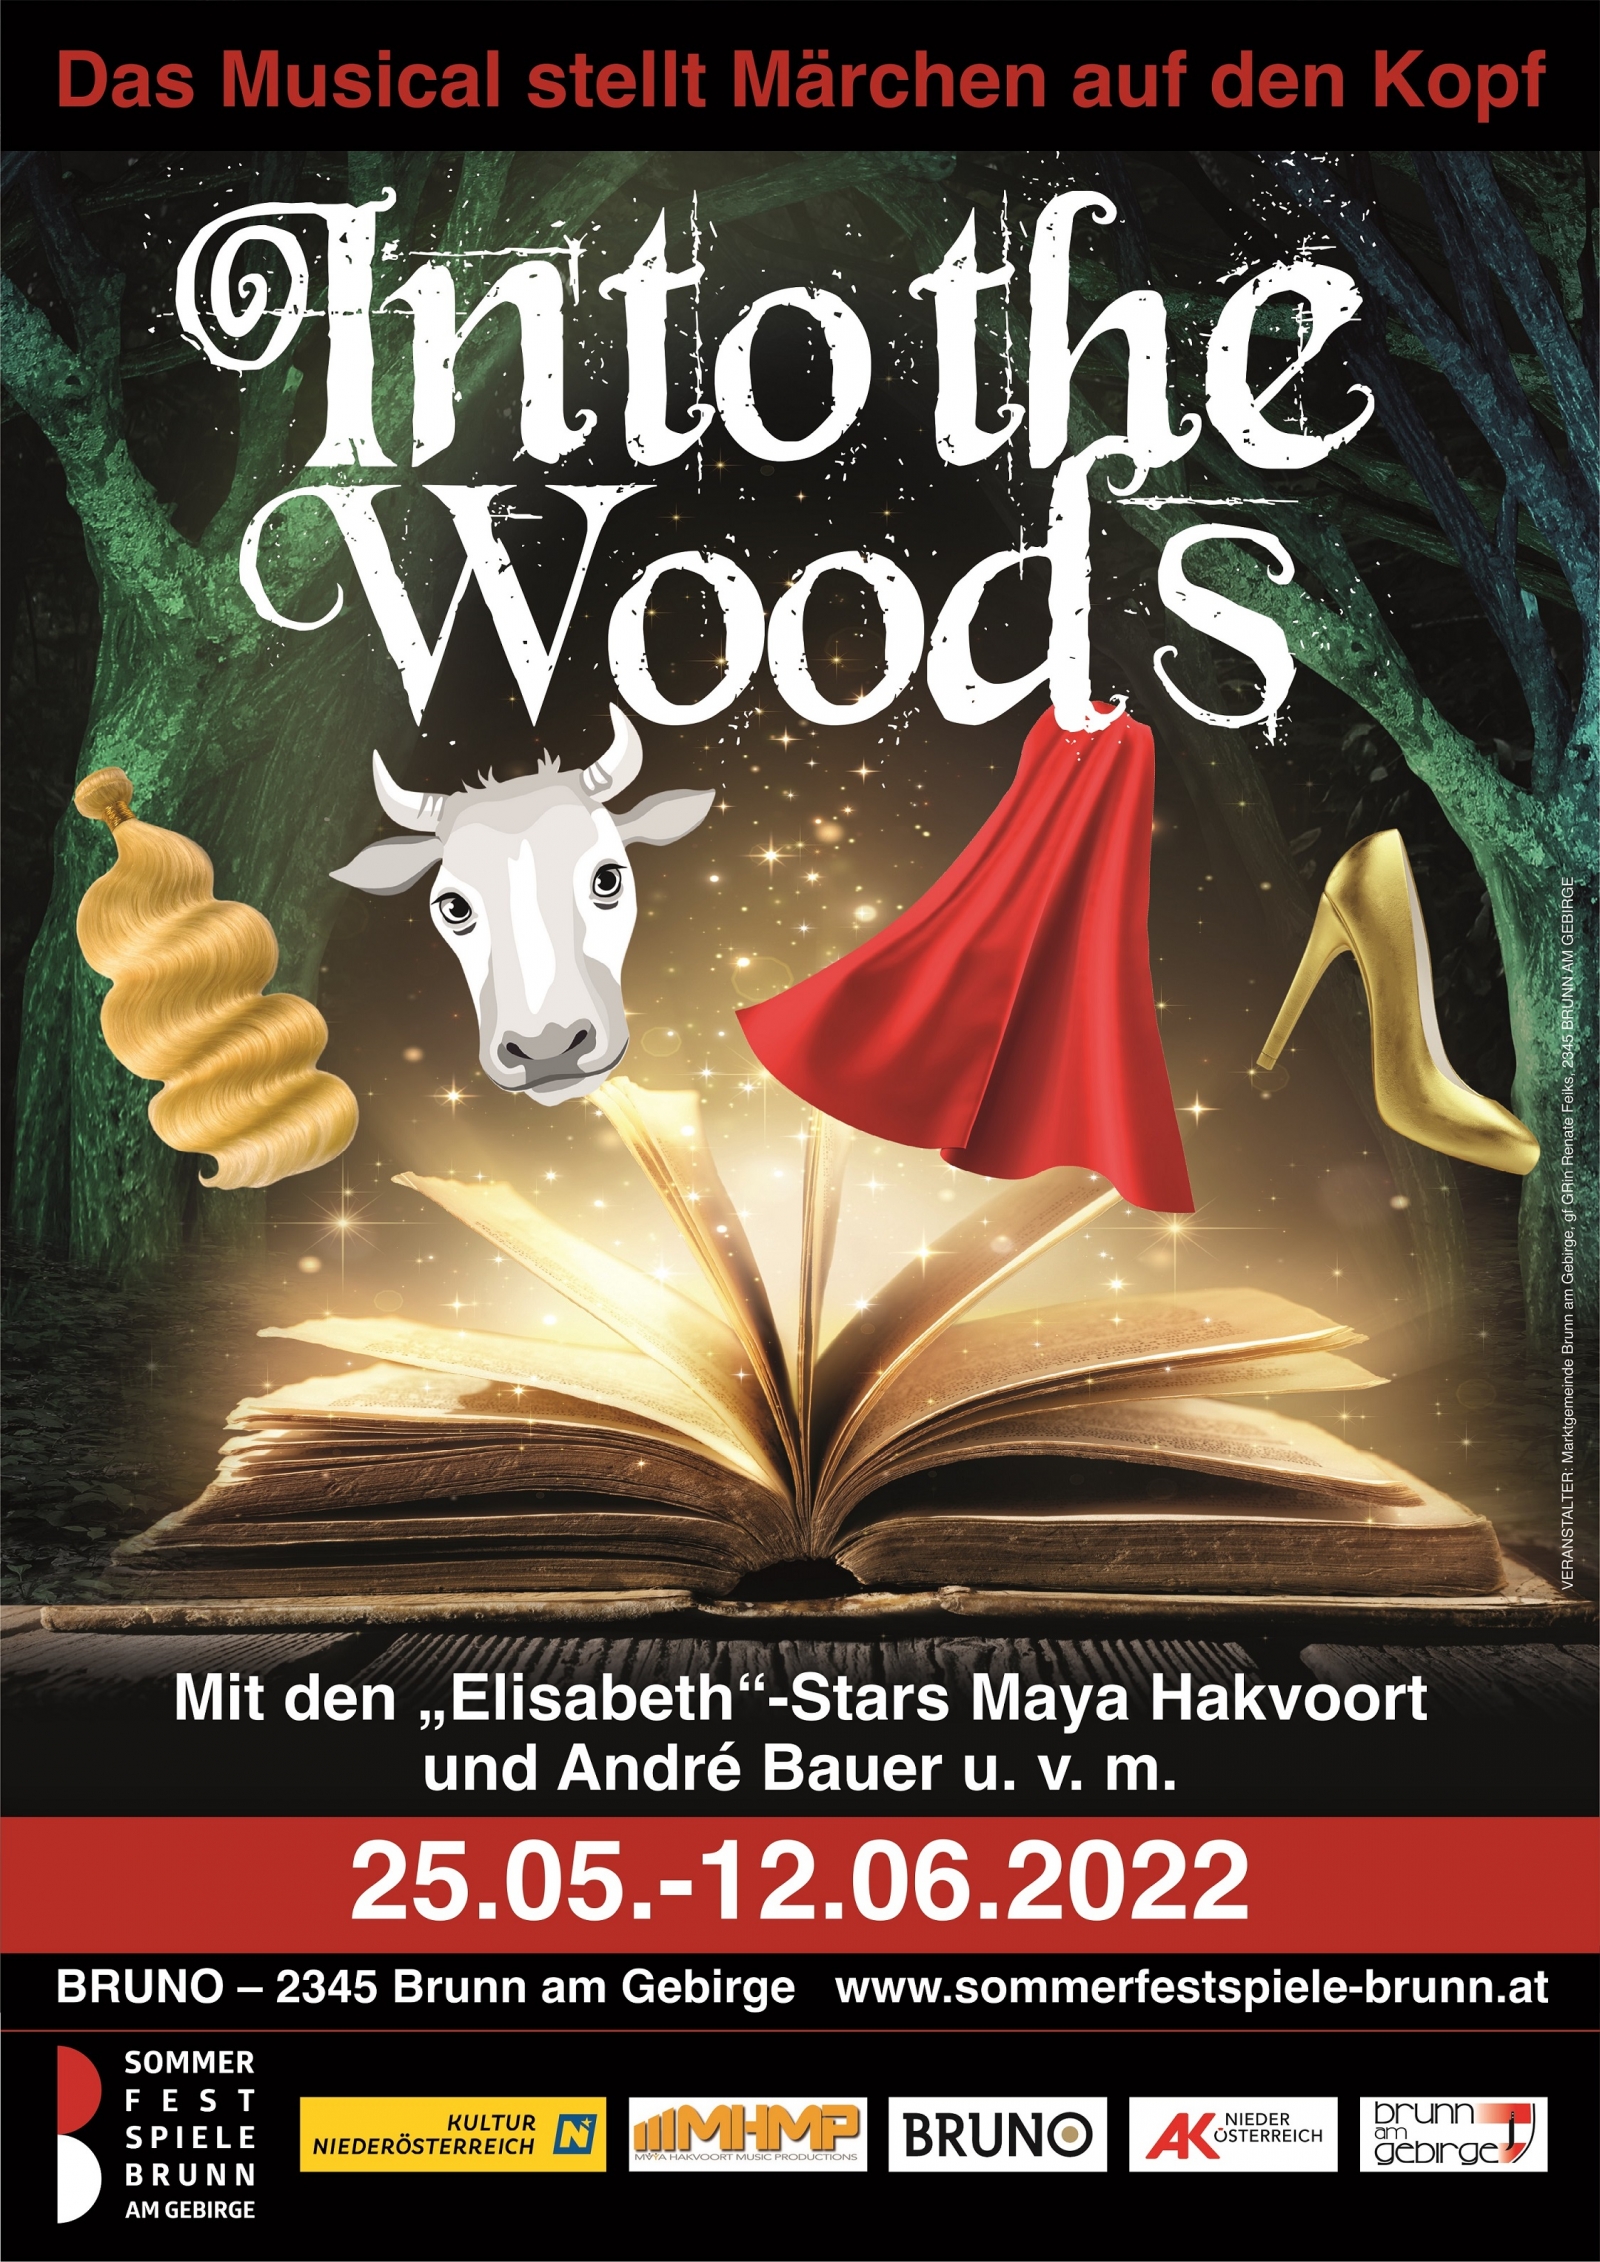 Into the Woods - Sommerfestspiele Brunn am Gebirge 2022